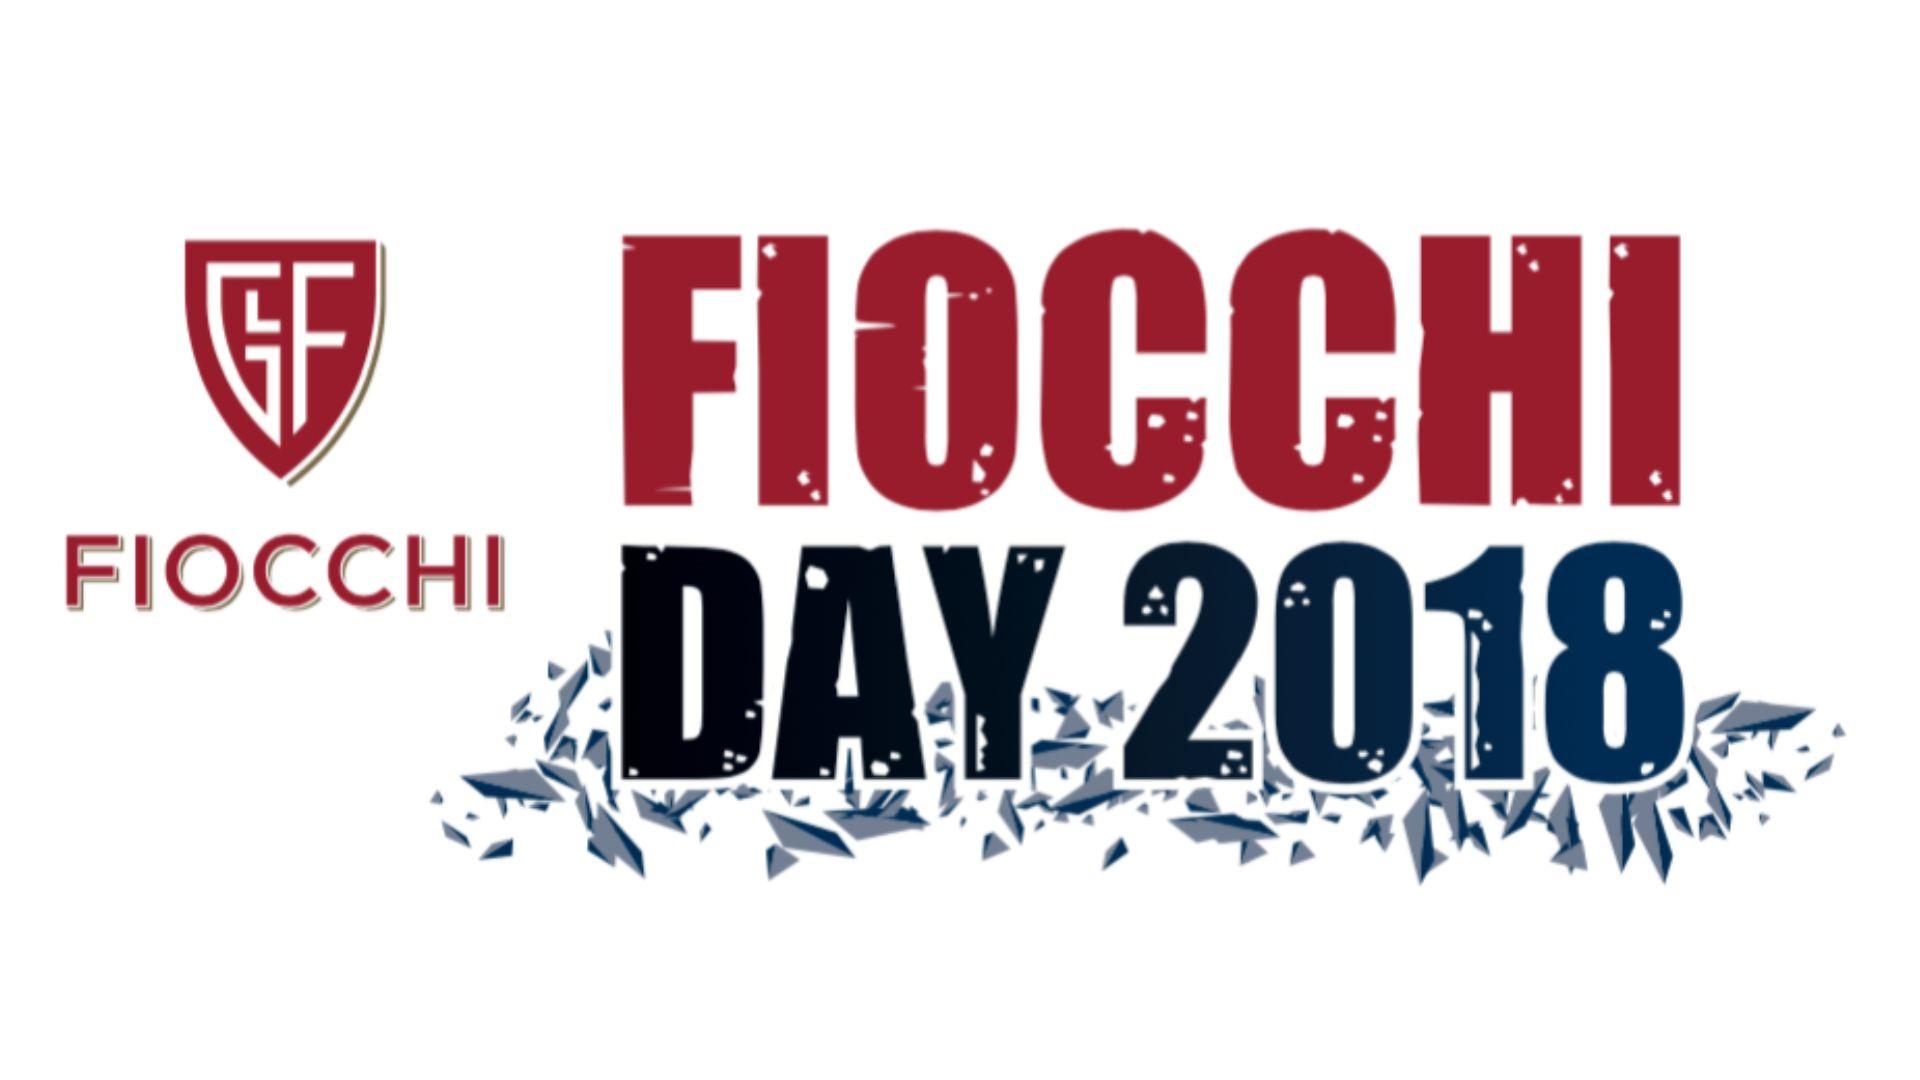 Fiocchi Logo - Fiocchi Day 2018 is just around the corner